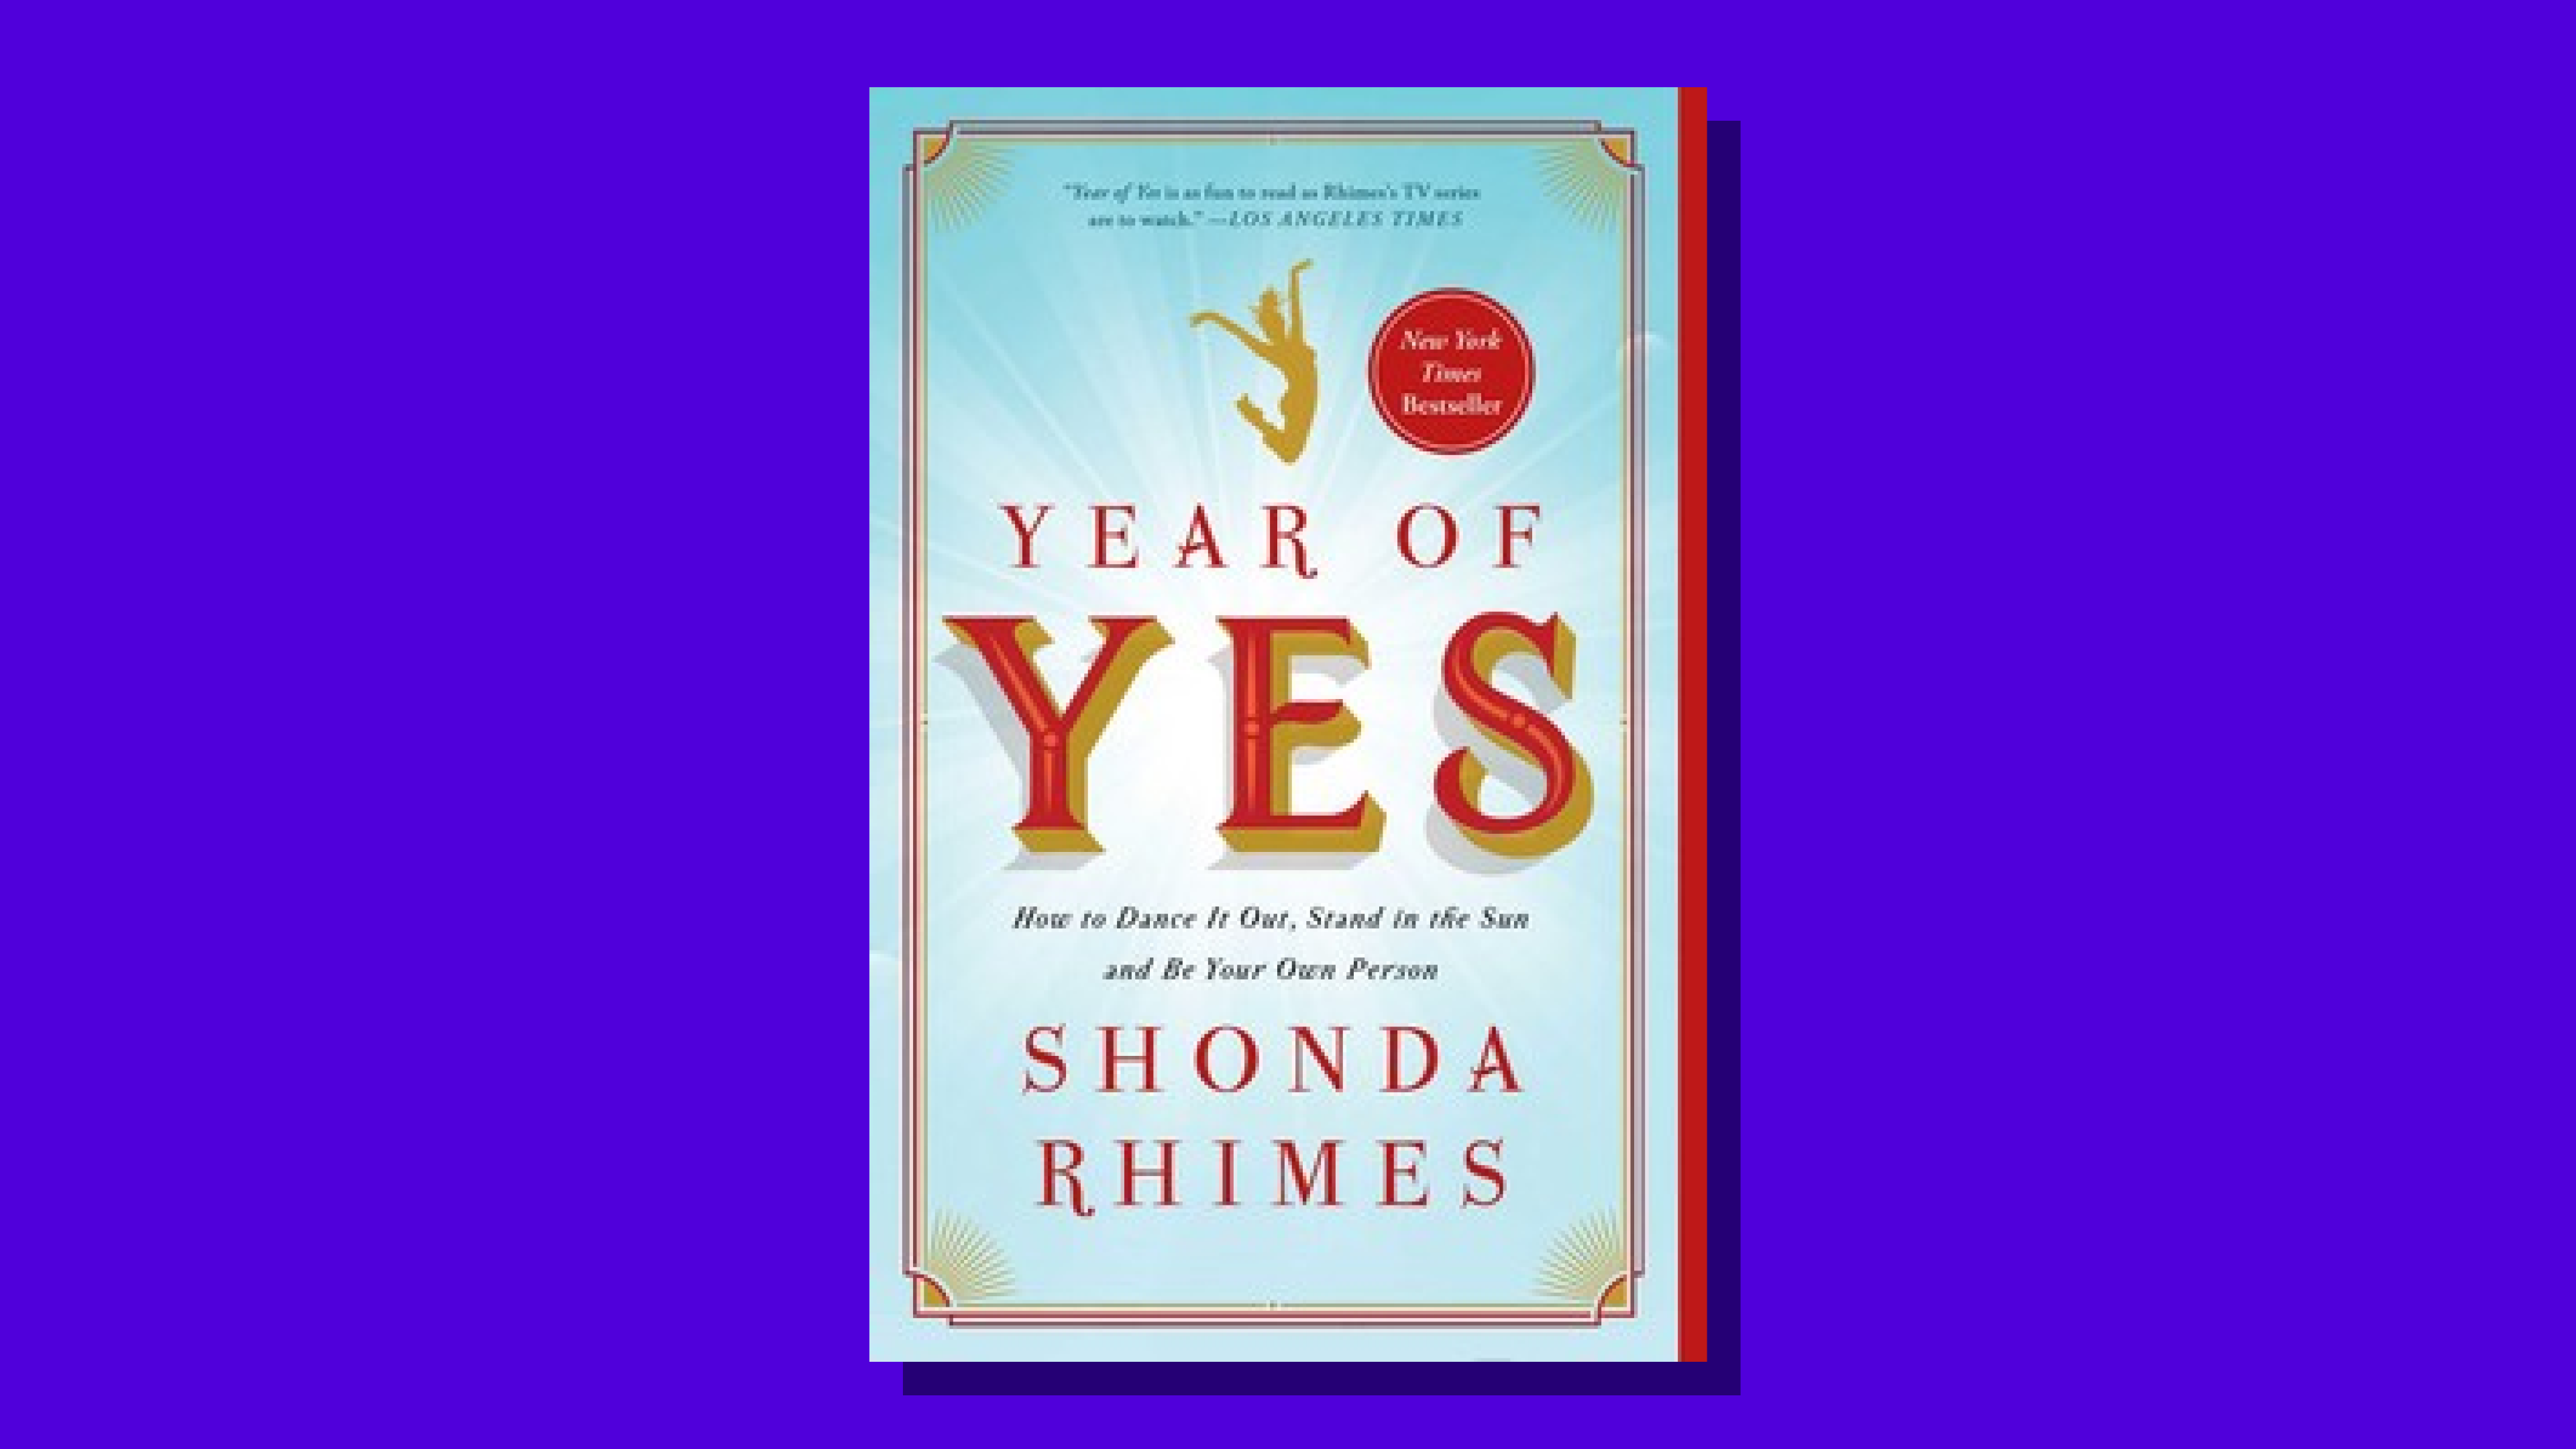 “Year of Yes” by Shonda Rhimes